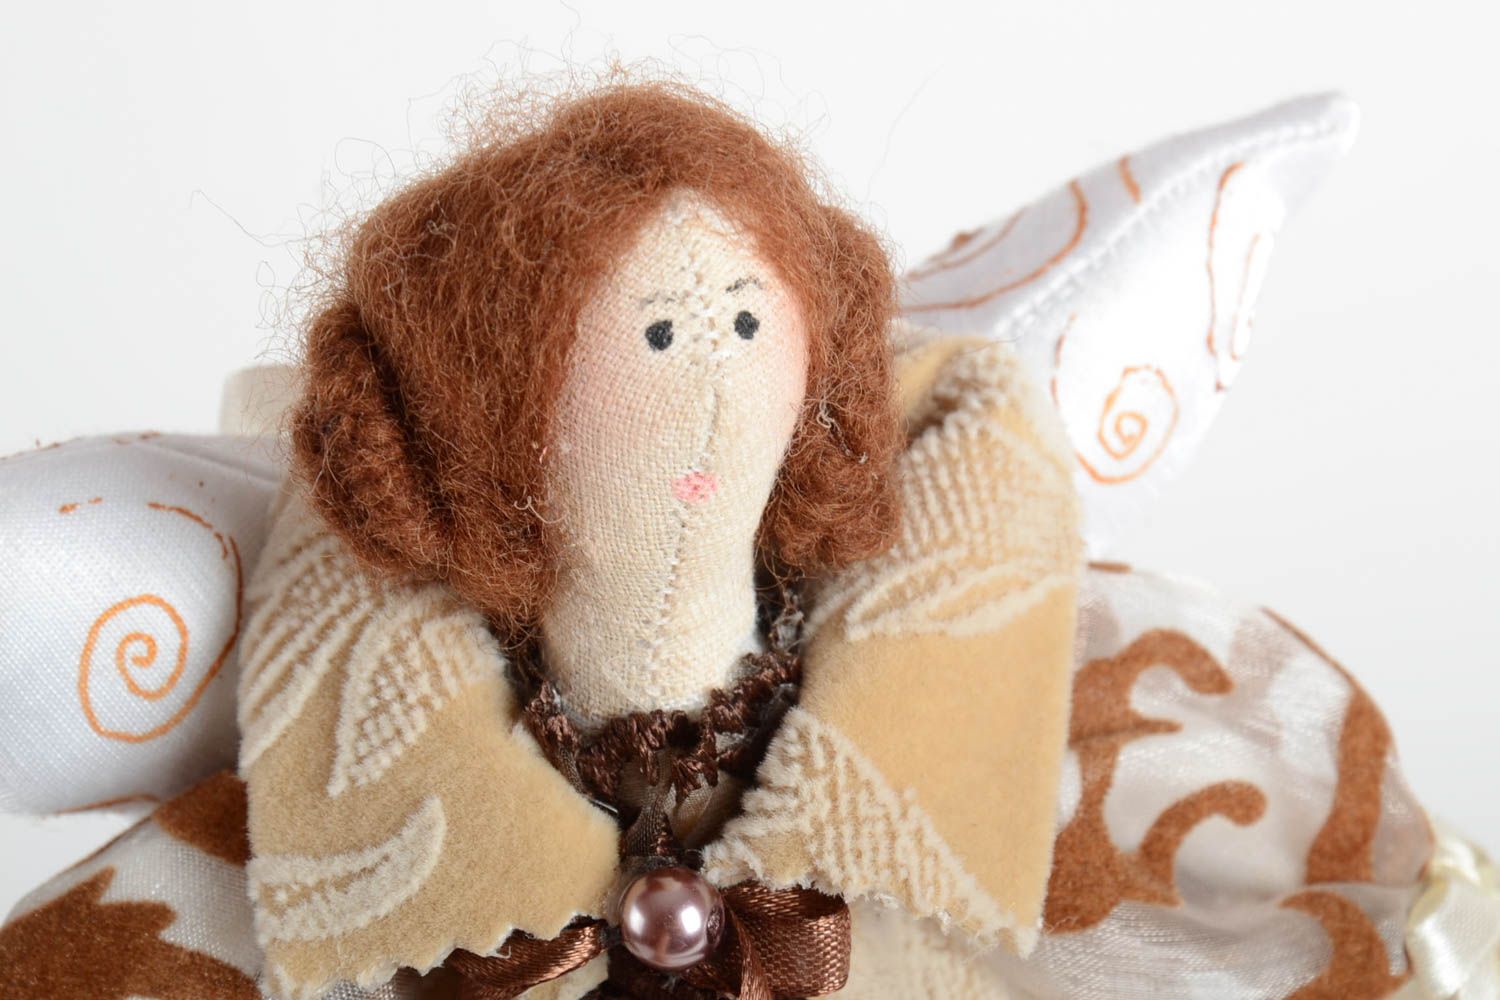 Handmade doll designer doll unusual toy decor ideas gift for girls toy decor photo 3